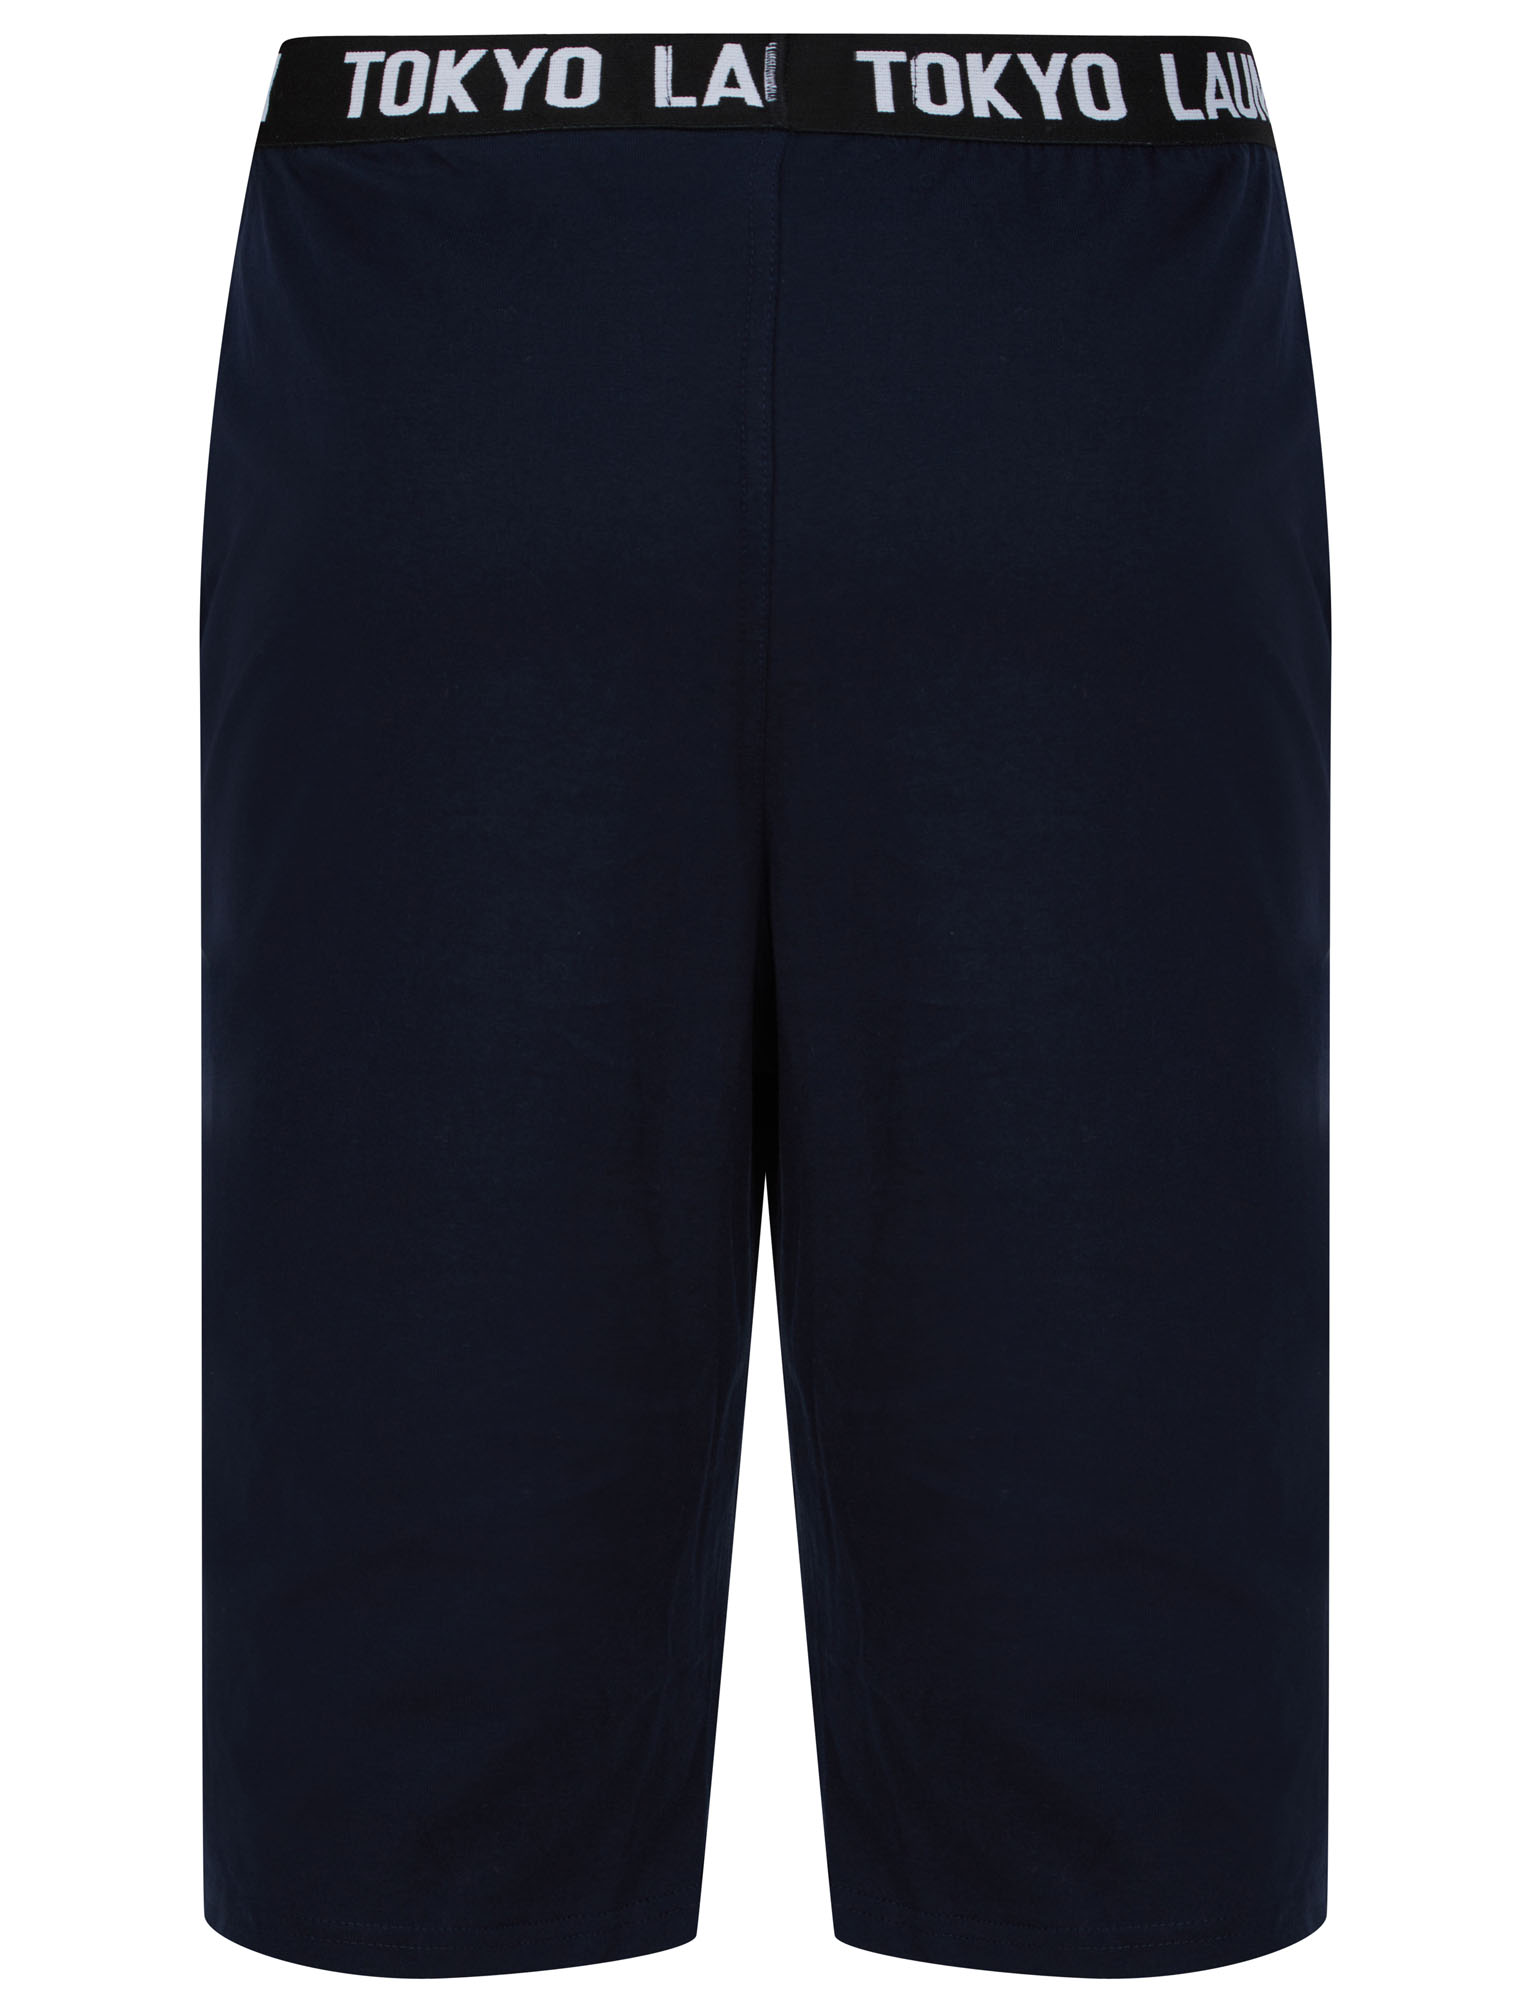 Men's Tokyo Laundry Comfy Thin Pyjama Lounge Shorts PJ Bottoms 100% Cotton 